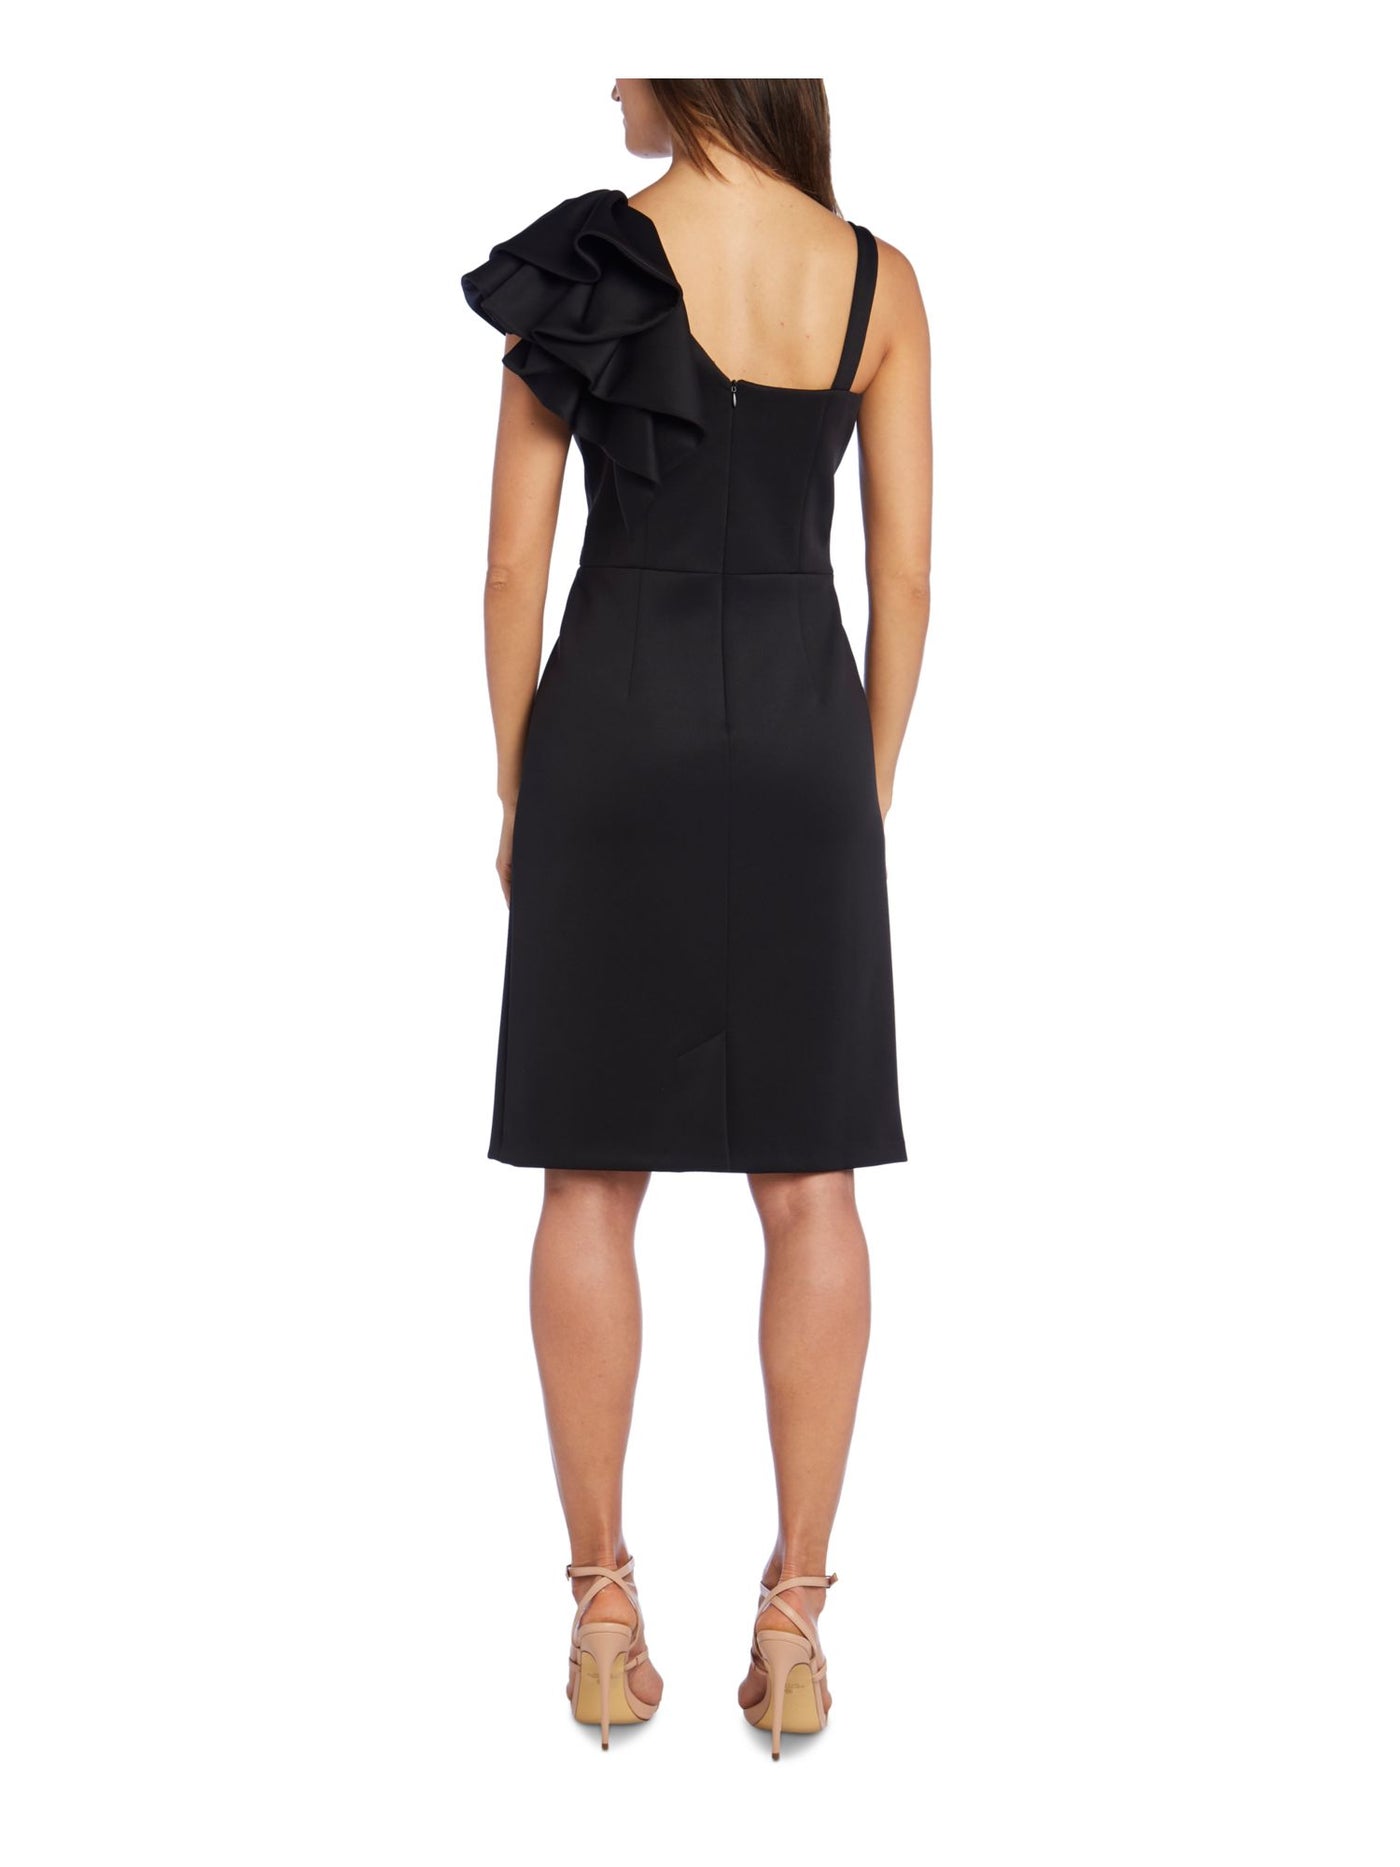 NIGHTWAY Womens Black Sleeveless Asymmetrical Neckline Above The Knee Evening Sheath Dress Petites 10P